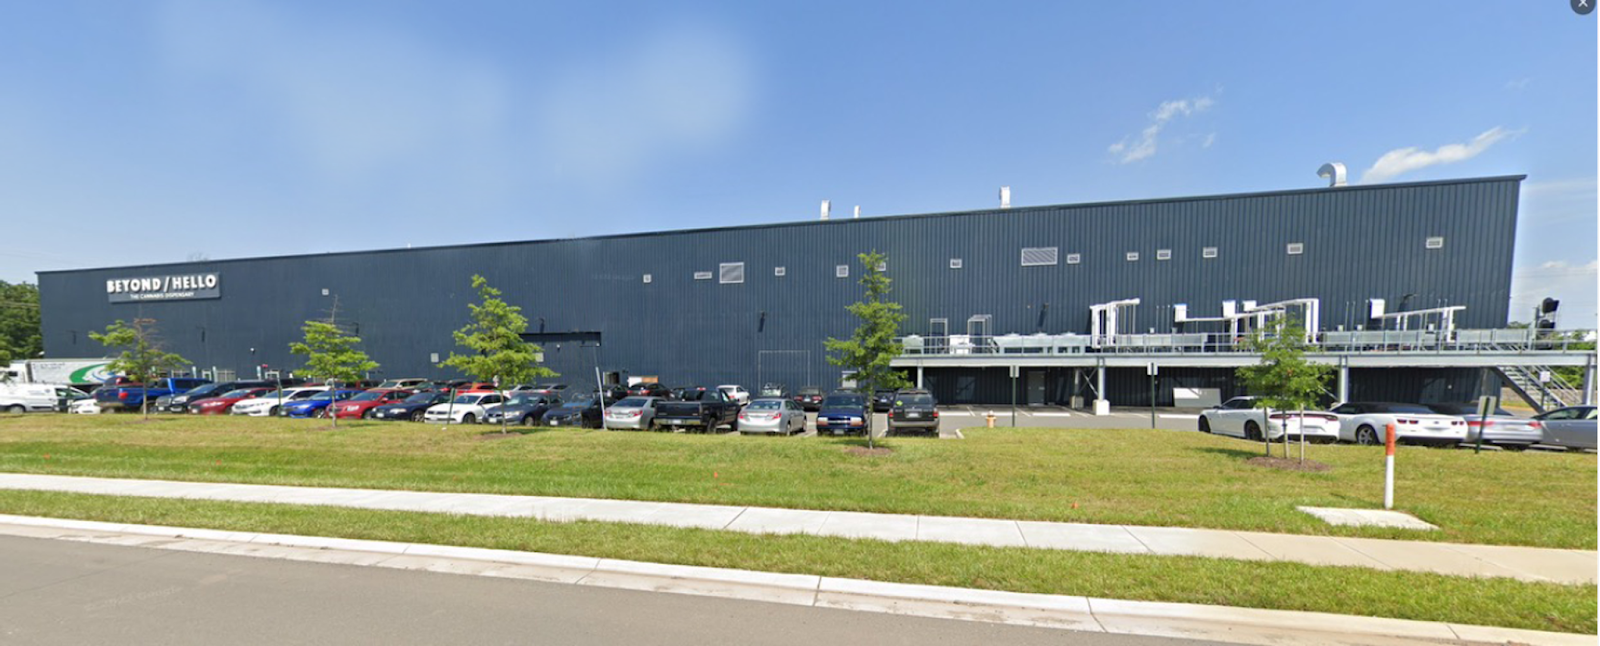 Dalitso Cannabis Processing Facility - Tennessee Pre-Engineered Steel Buildings | Prefab Metal Building FAQ